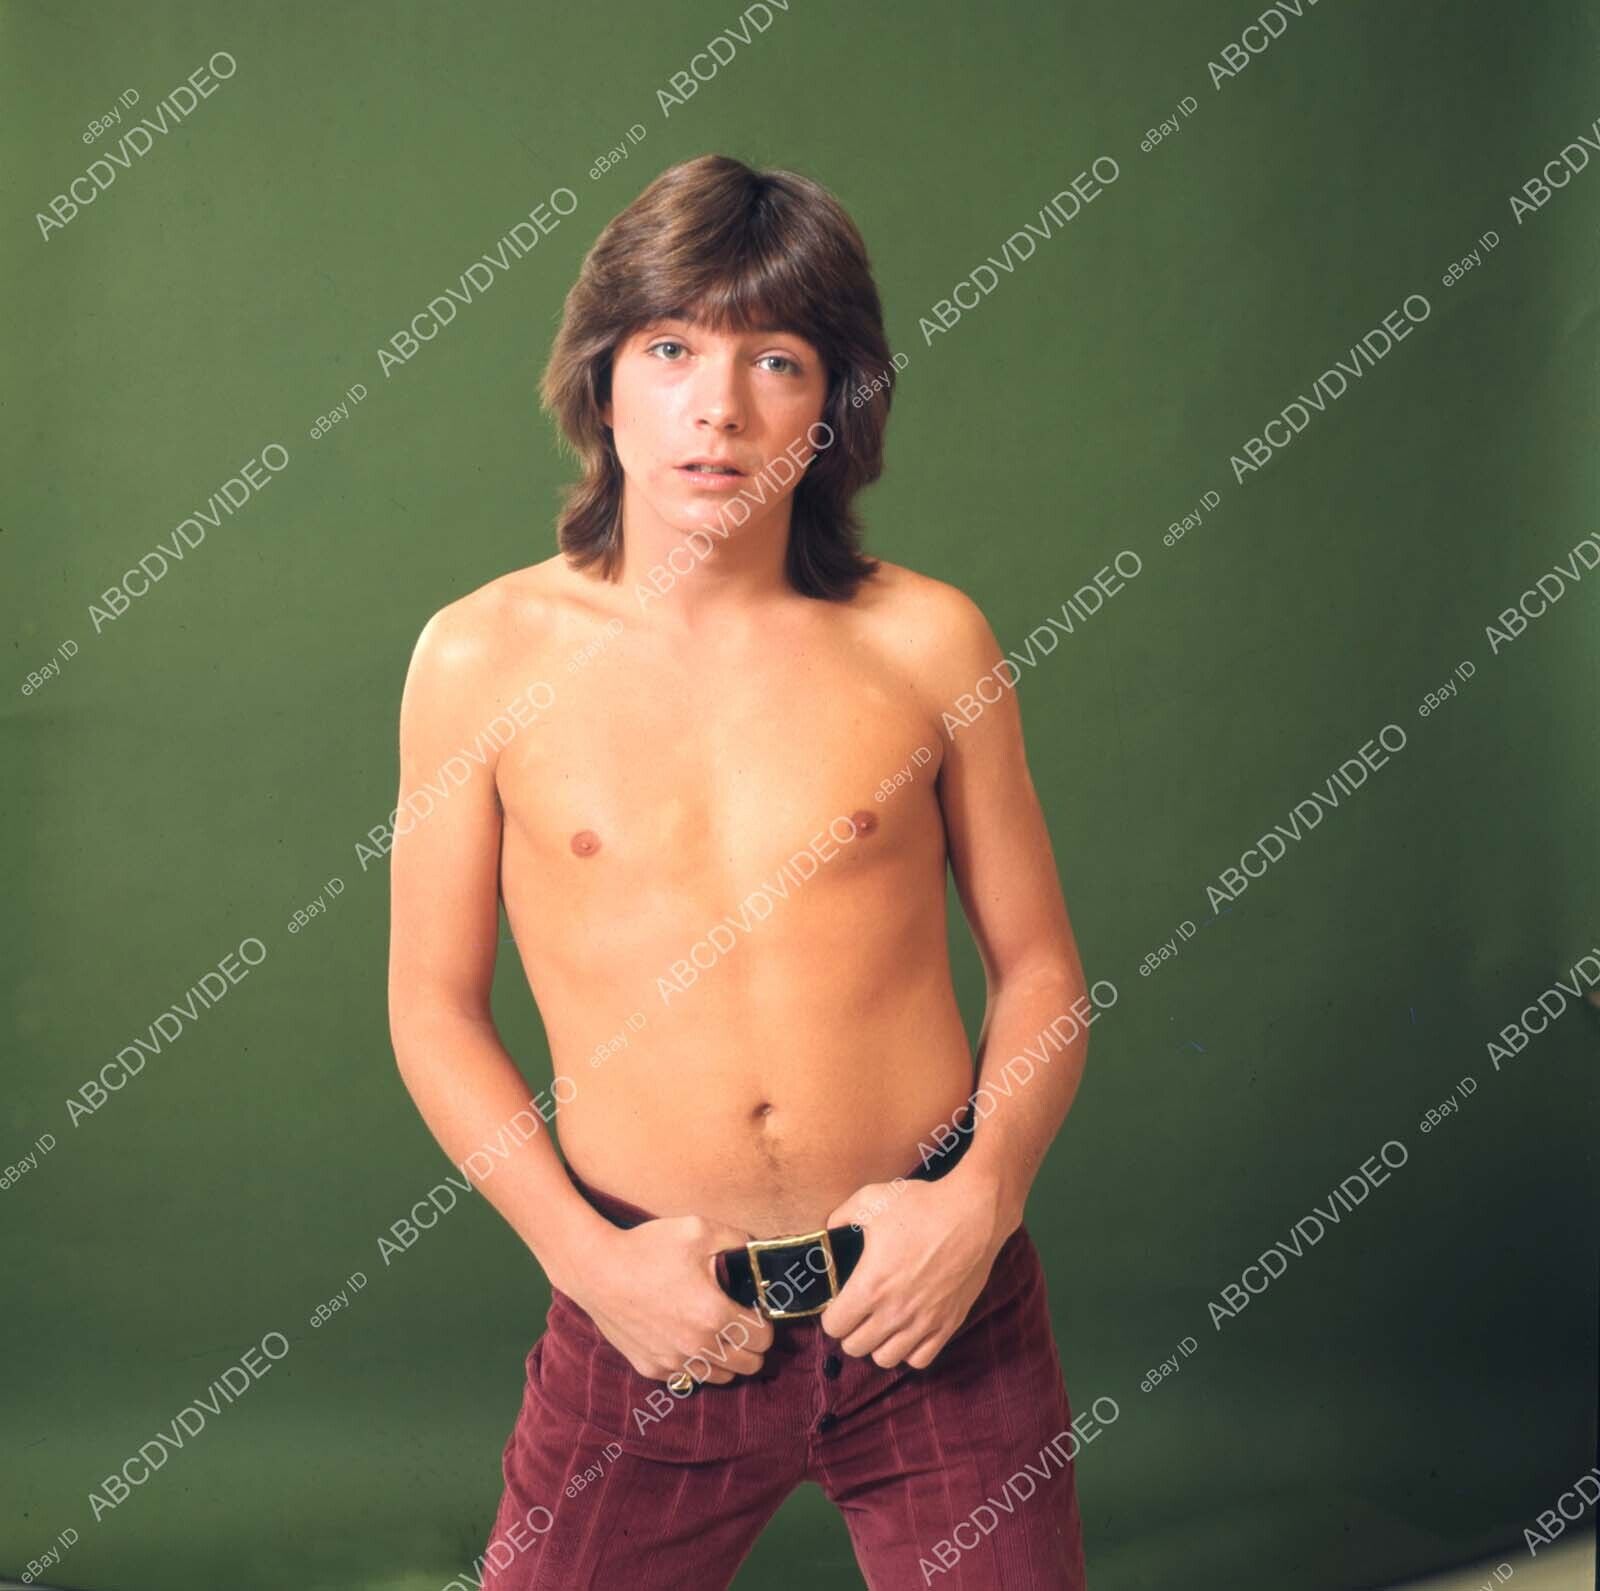 8b20-17908 shirtless David Cassidy portrait 8b20-17908 8b20-17908